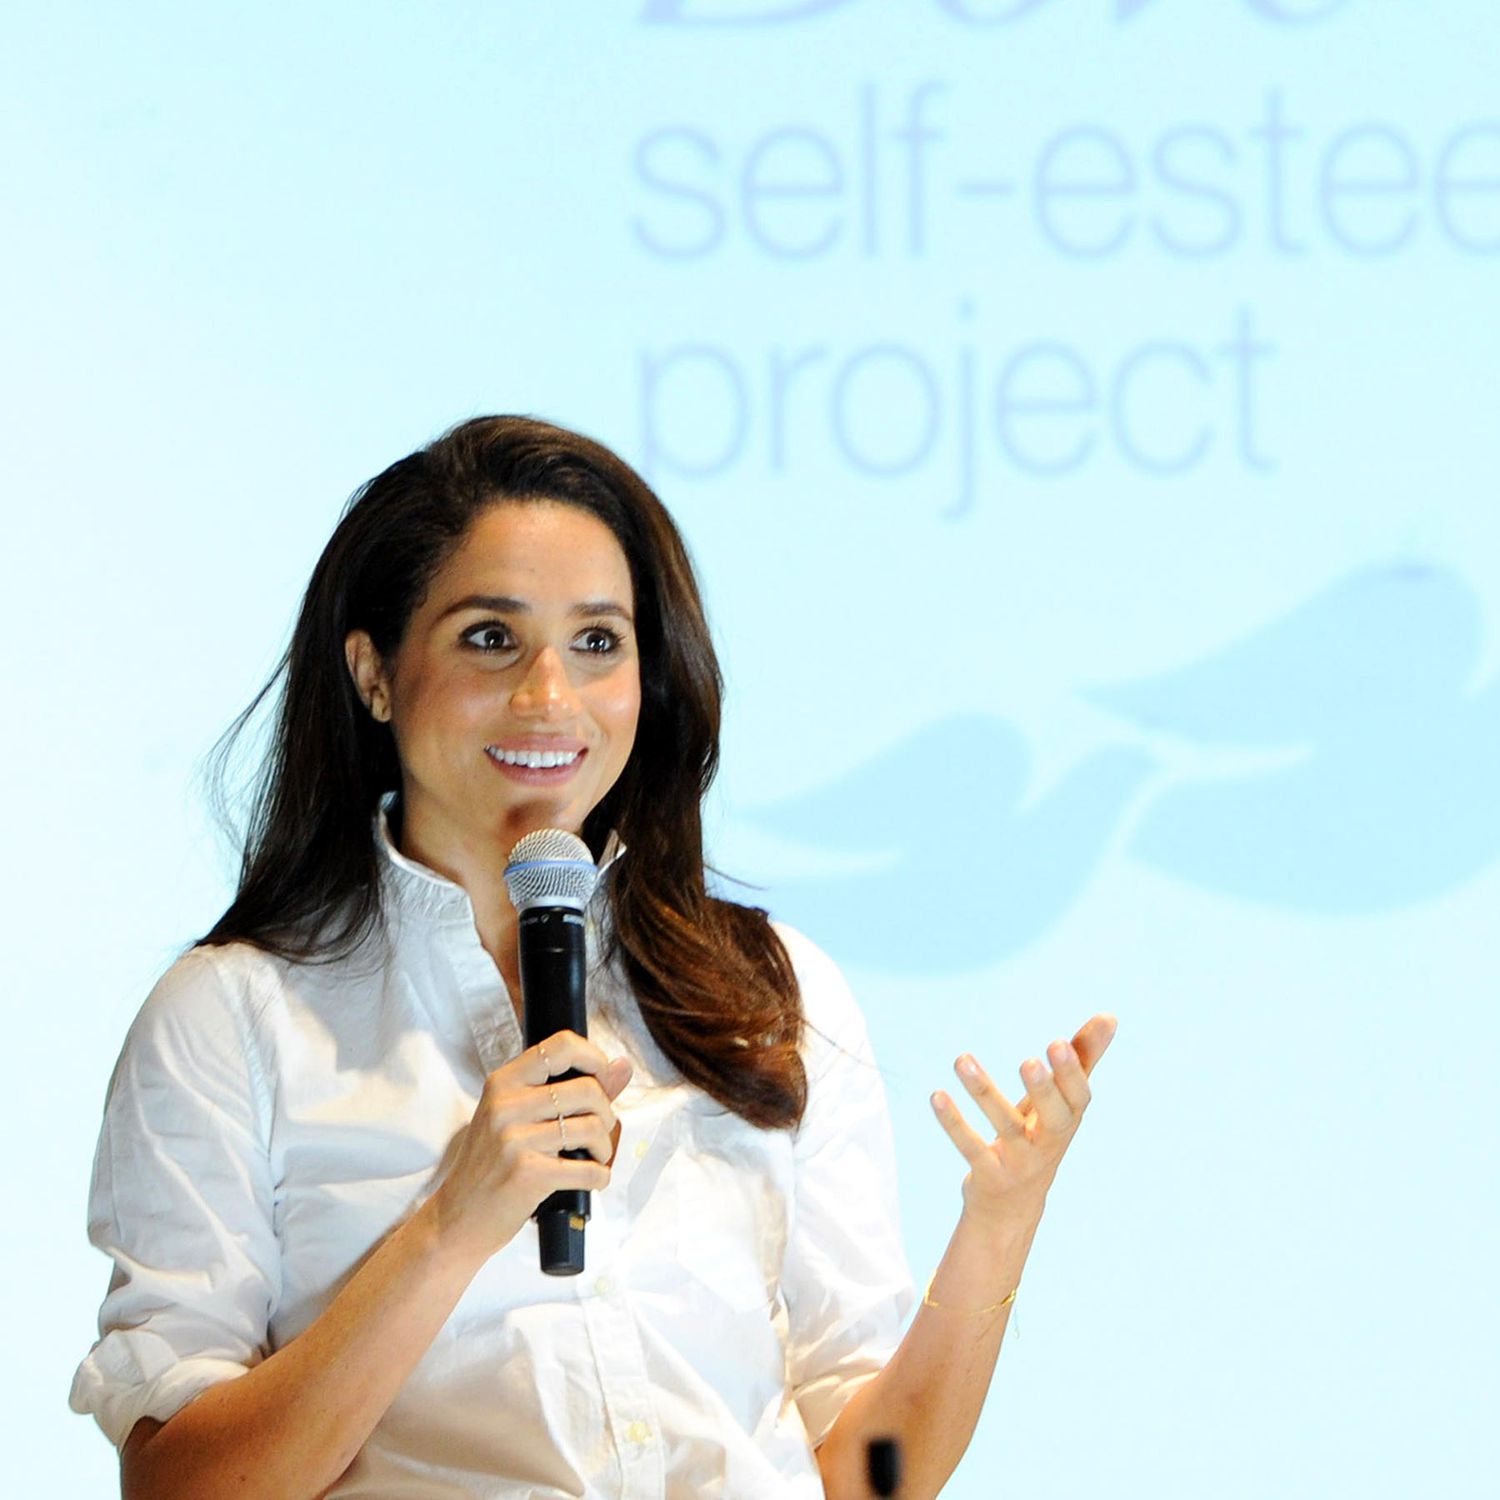 Meghan Markle Shares The New Dove Self-Esteem Project